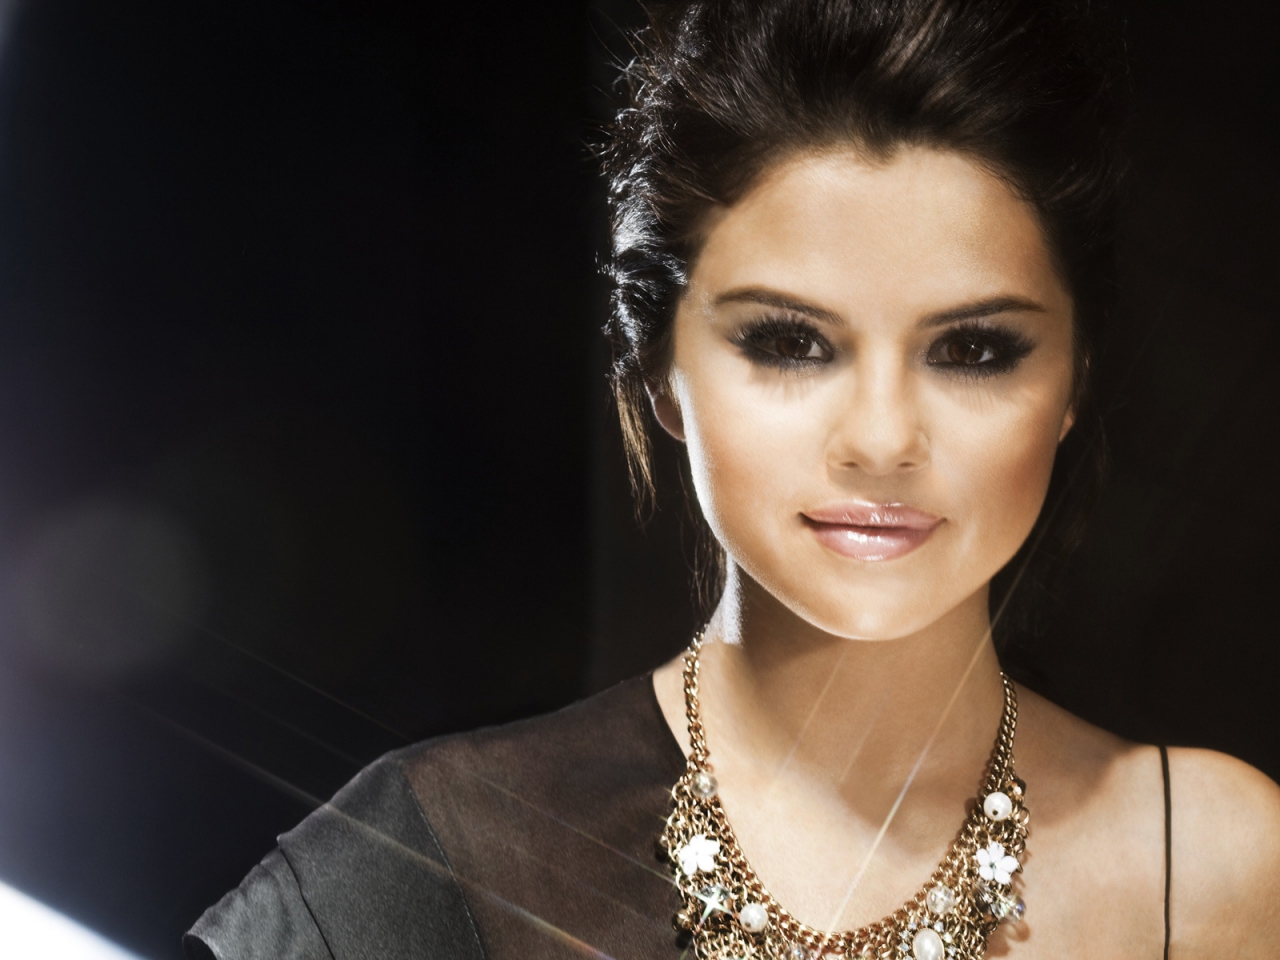 Beautiful Selena Gomez for 1280 x 960 resolution